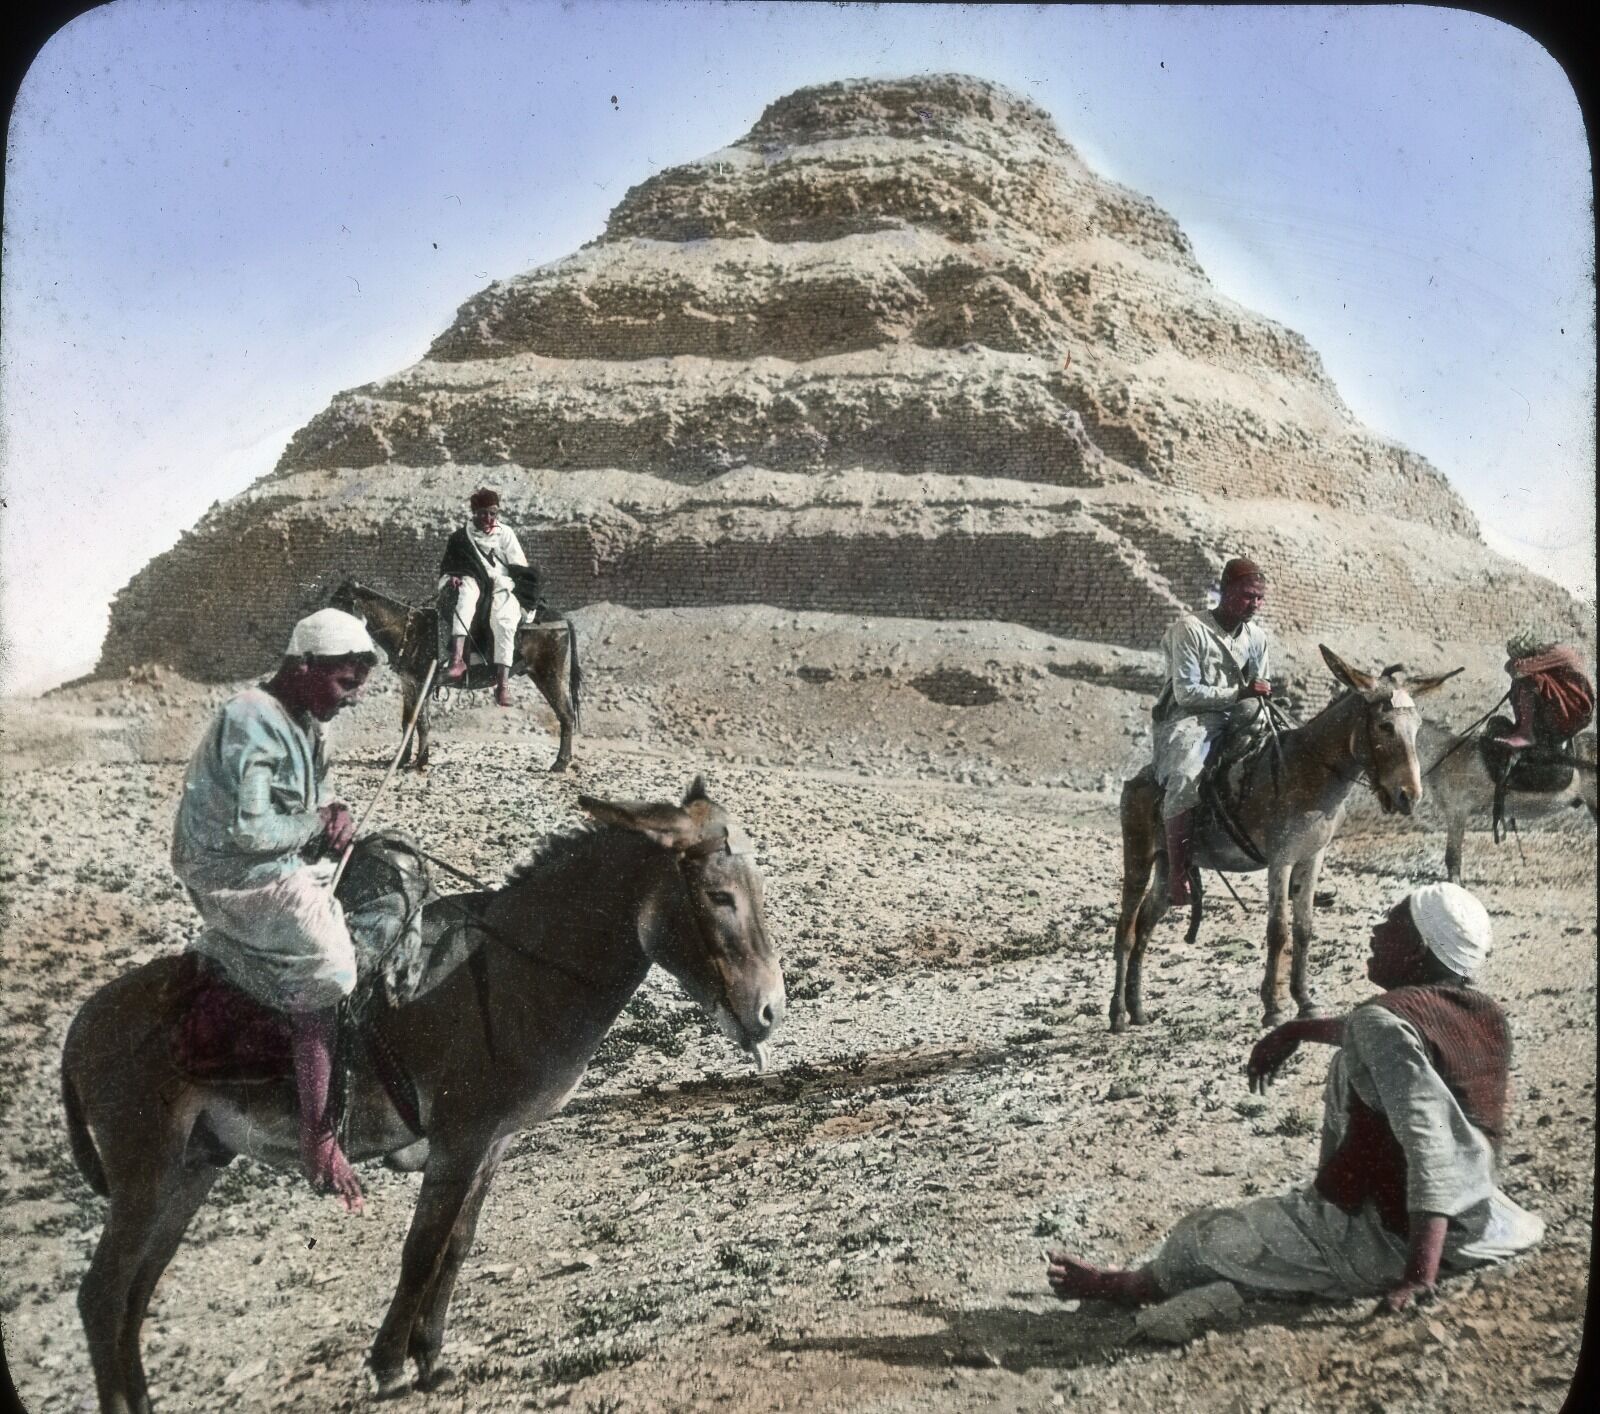 Keystone View Co Color Tinted Glass Slide Step Pyramid Saqqara #9776